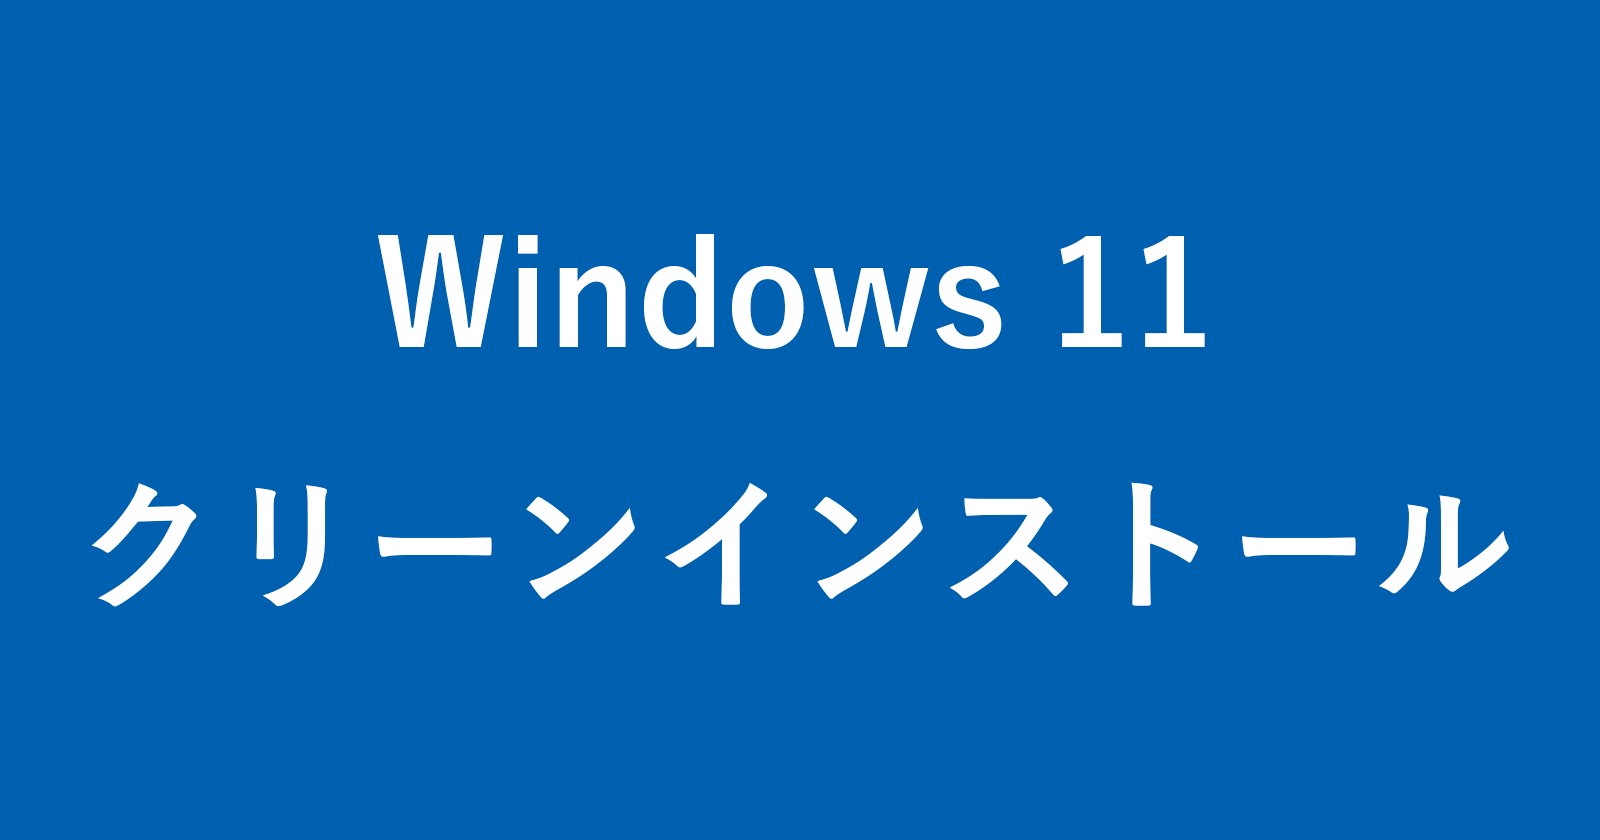 windows 11 clean install